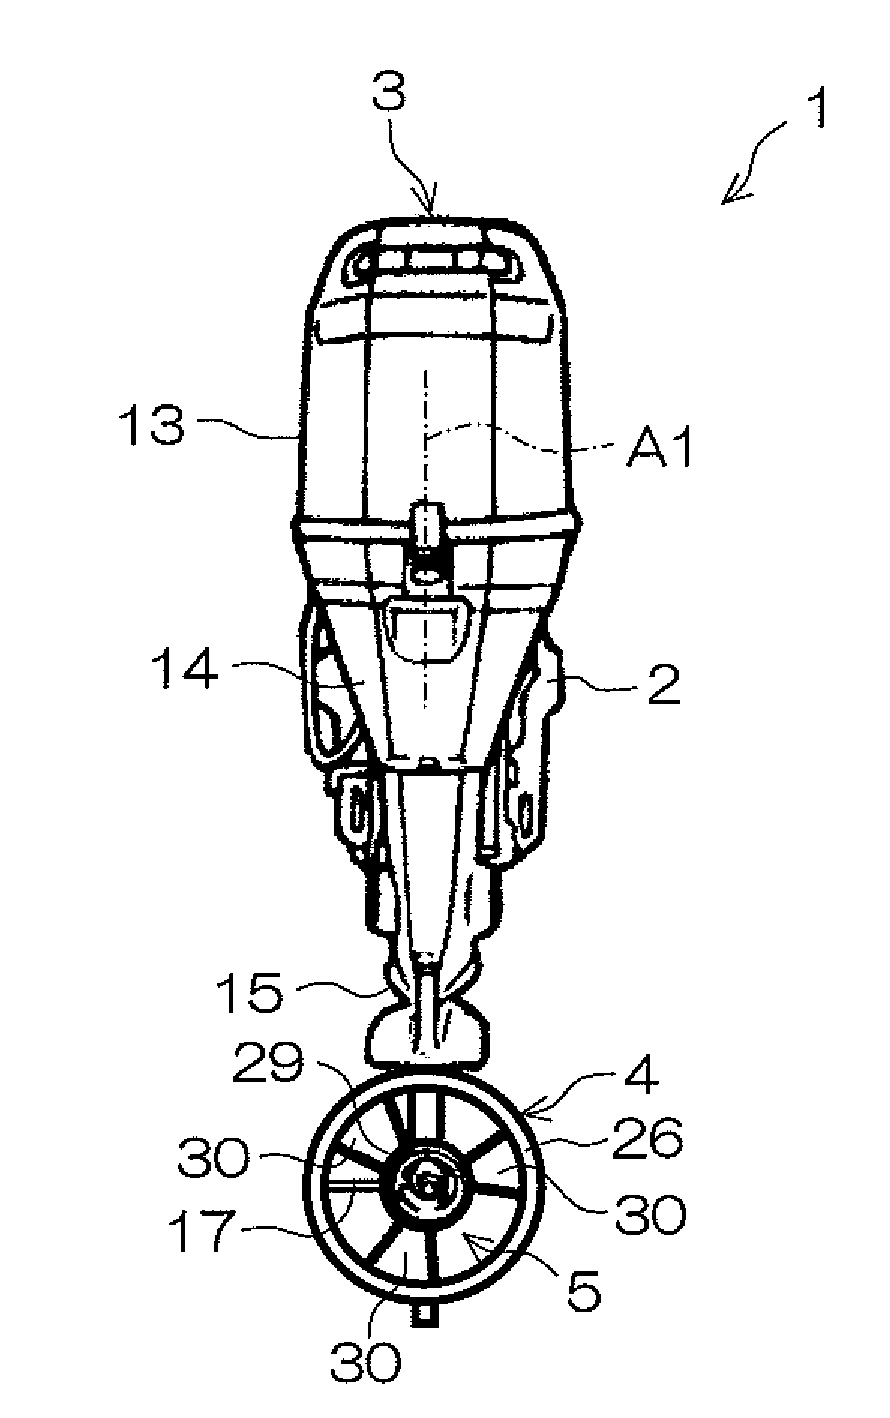 Marine vessel propulsion device